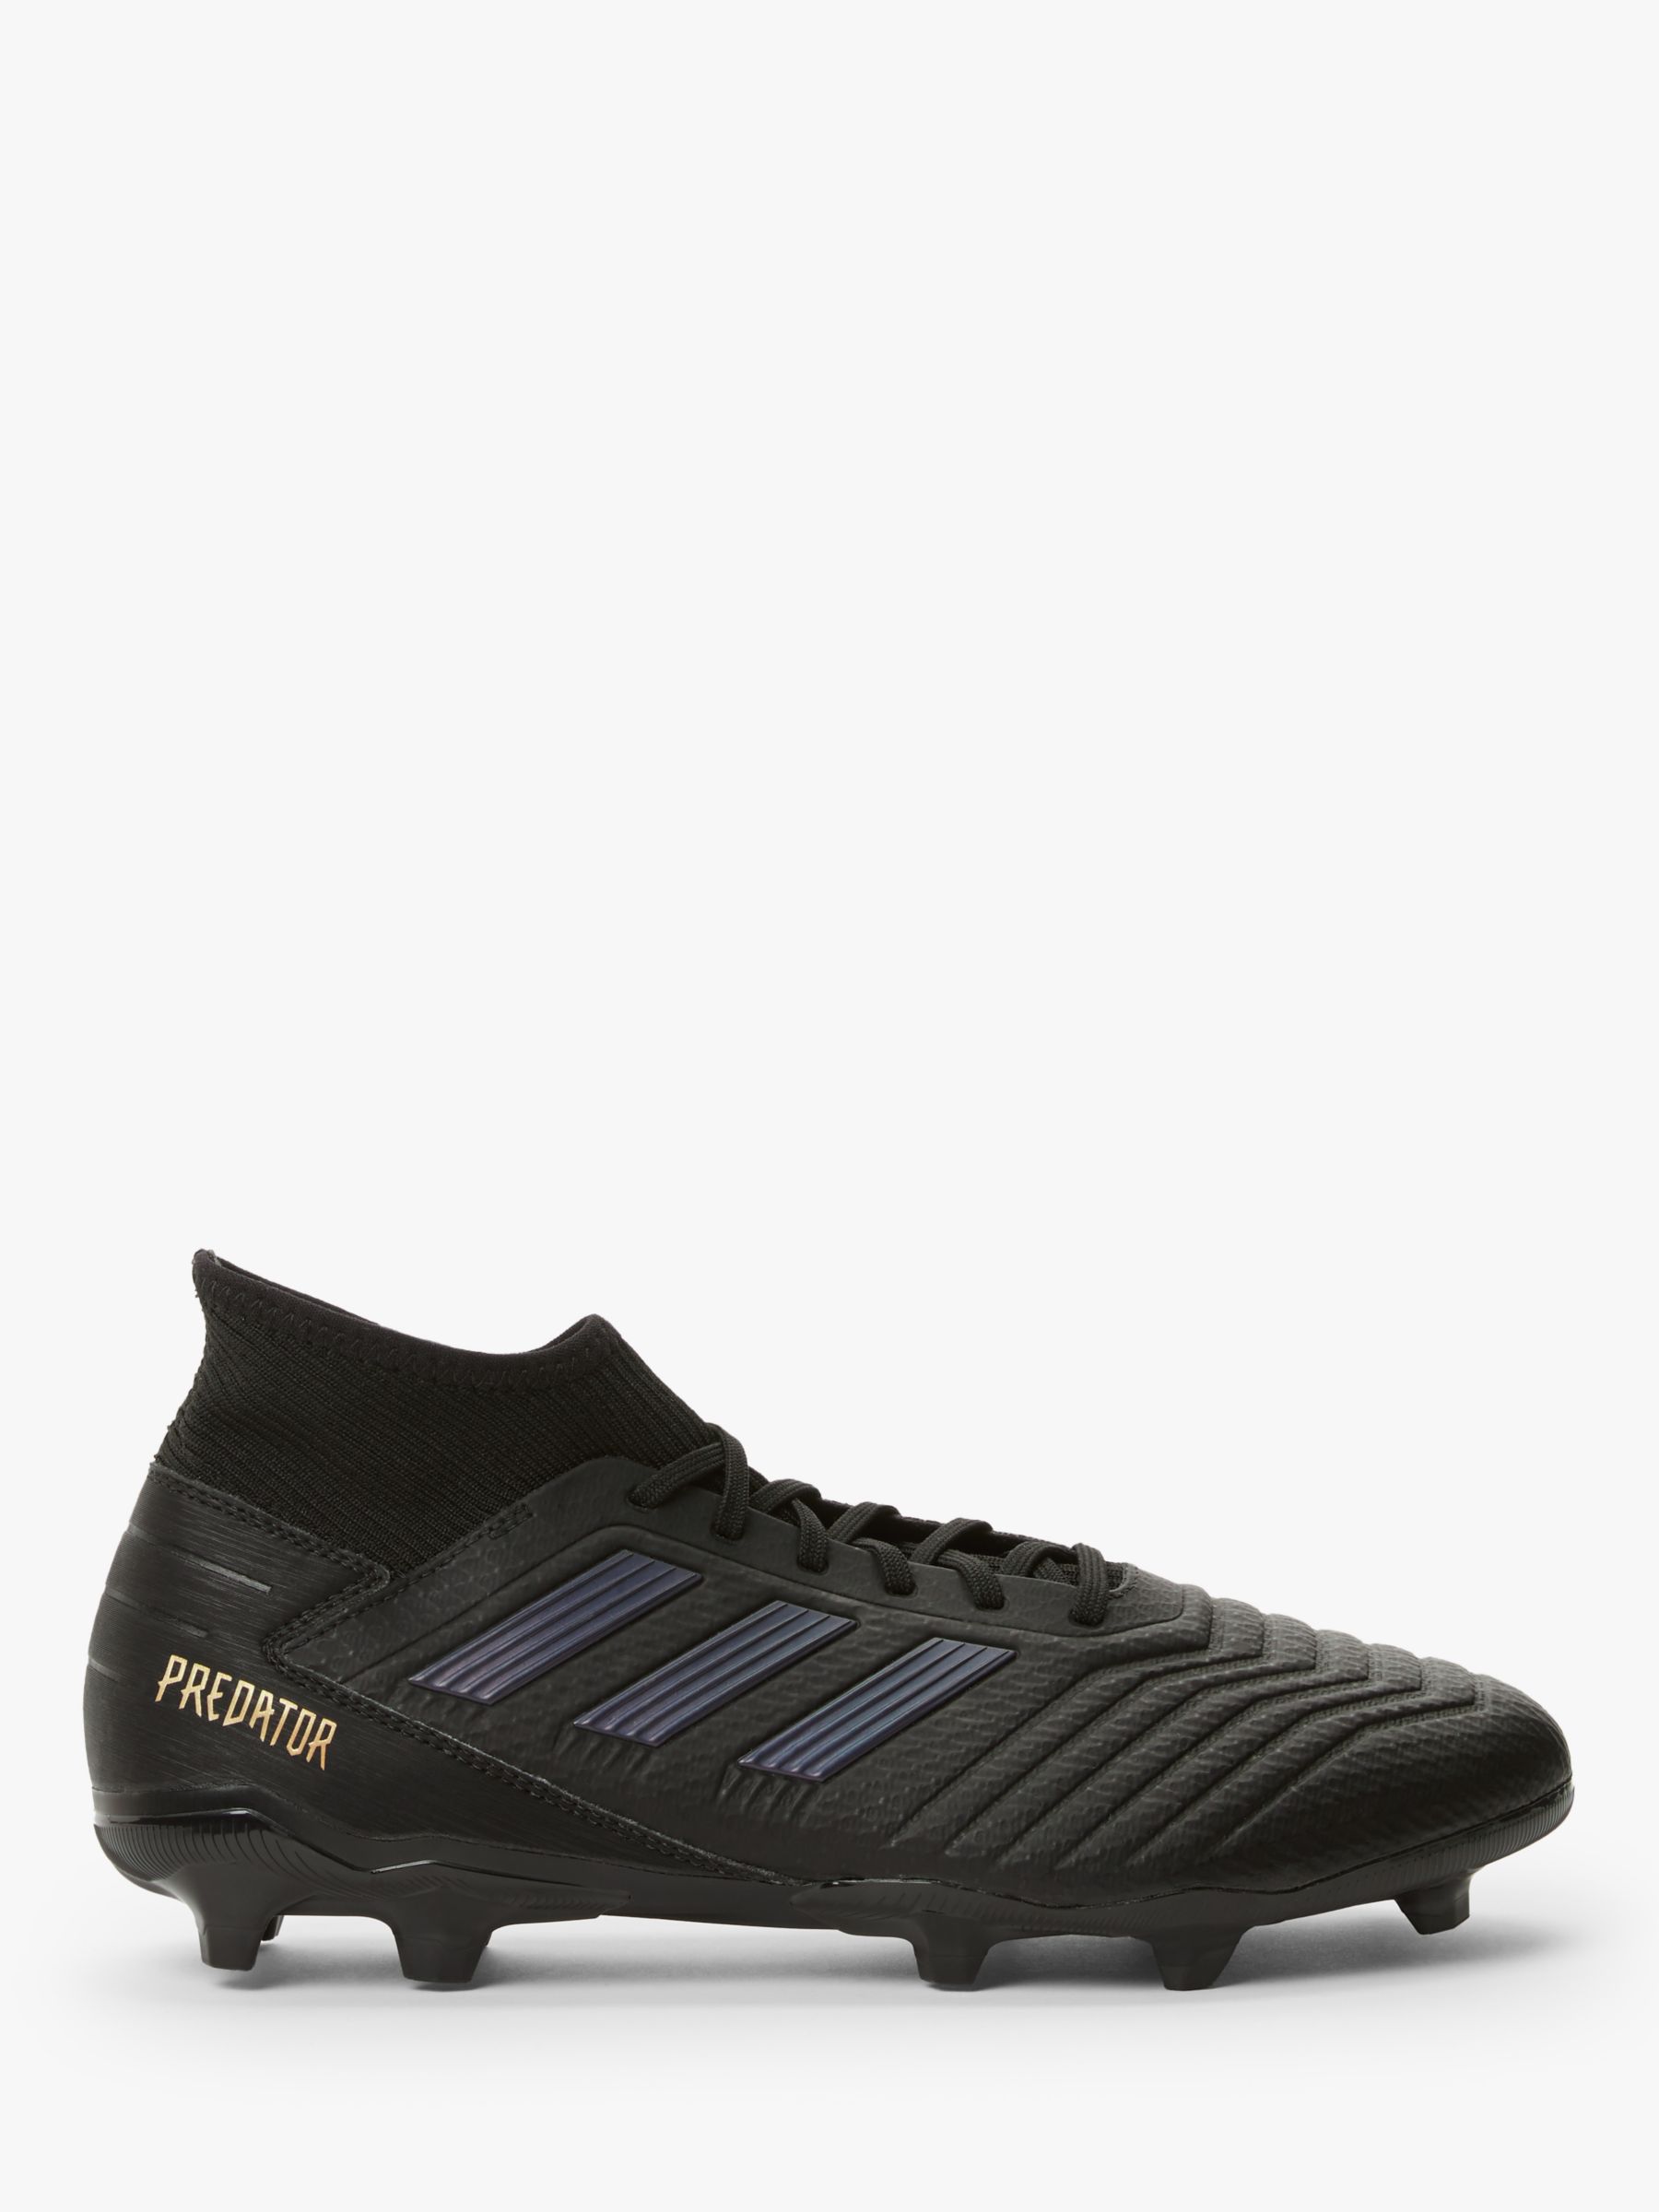 adidas all black football boots